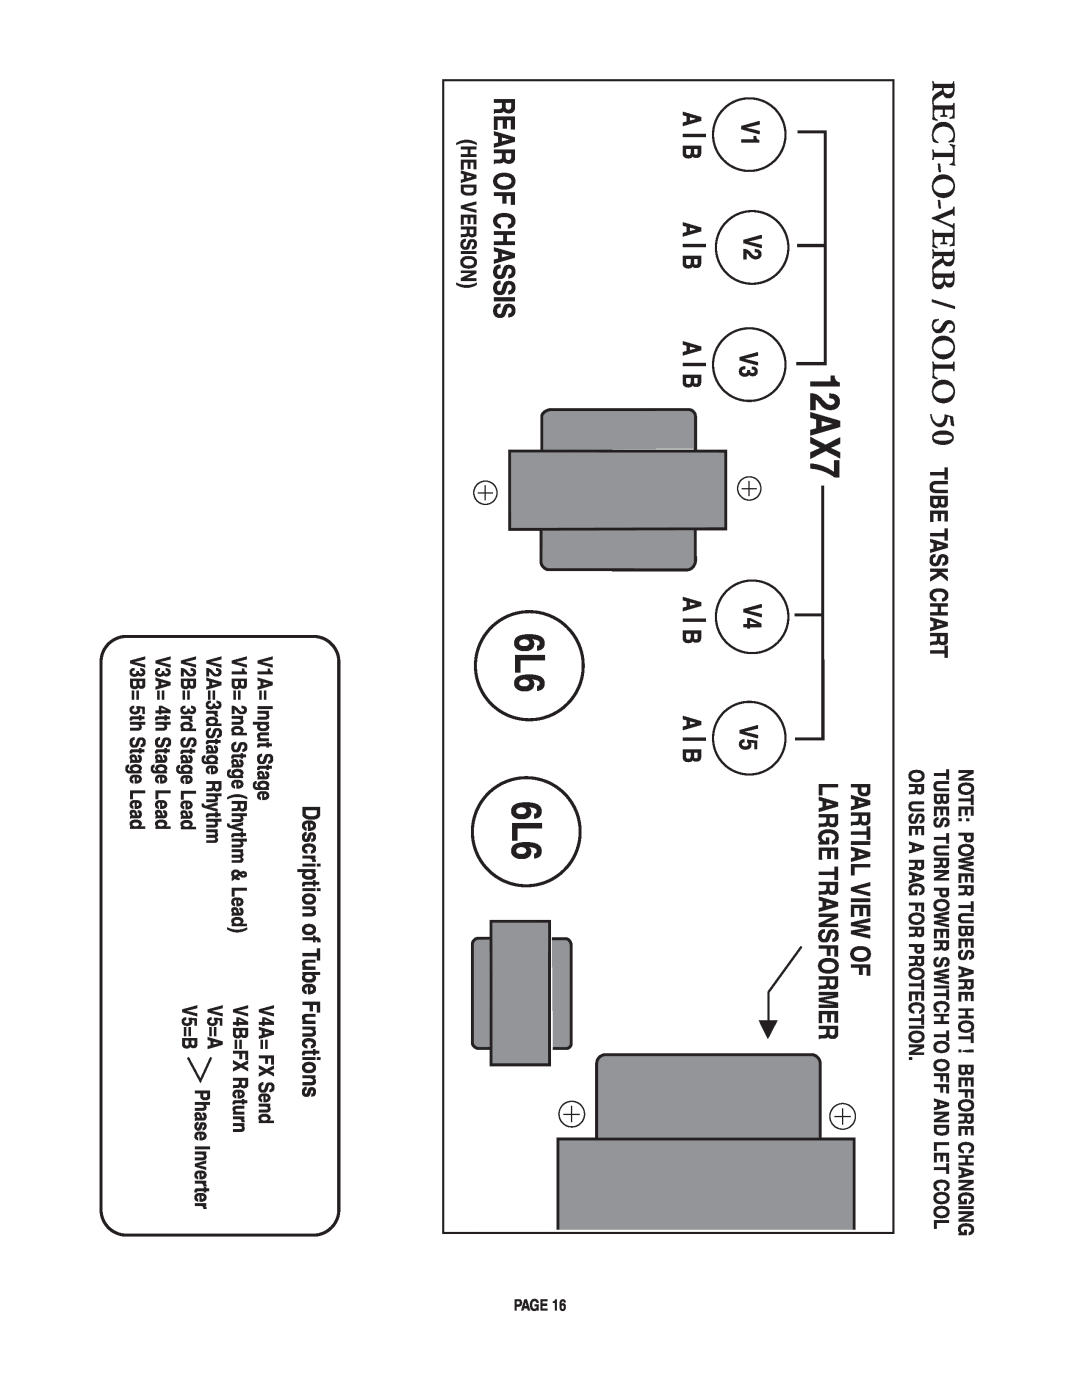 Mesa/Boogie pmn owner manual 12AX7, 6L6 6L6, V5 A B, Description of Tube Functions, Head Version, V1A= Input Stage, V5=B 